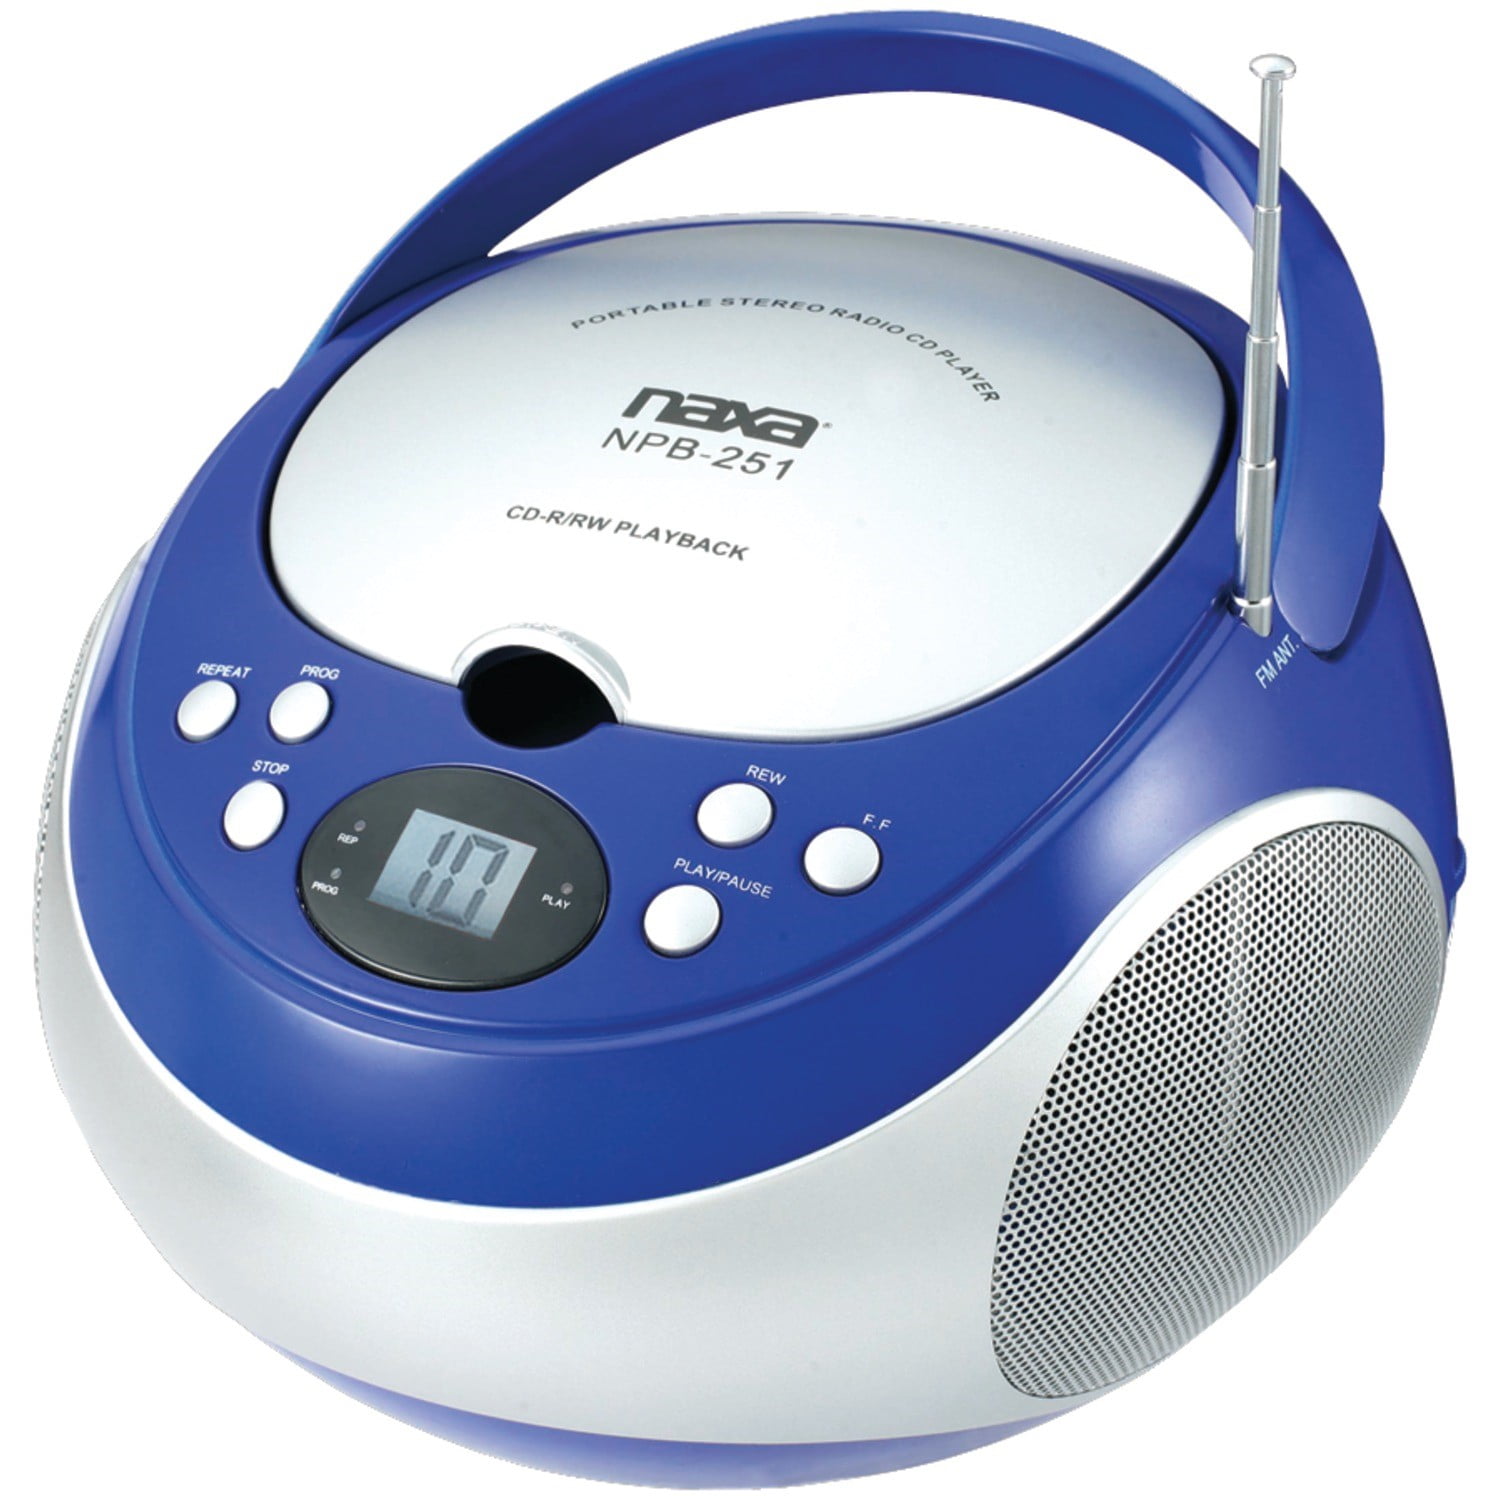 GPX Portable CD Player CDP1805